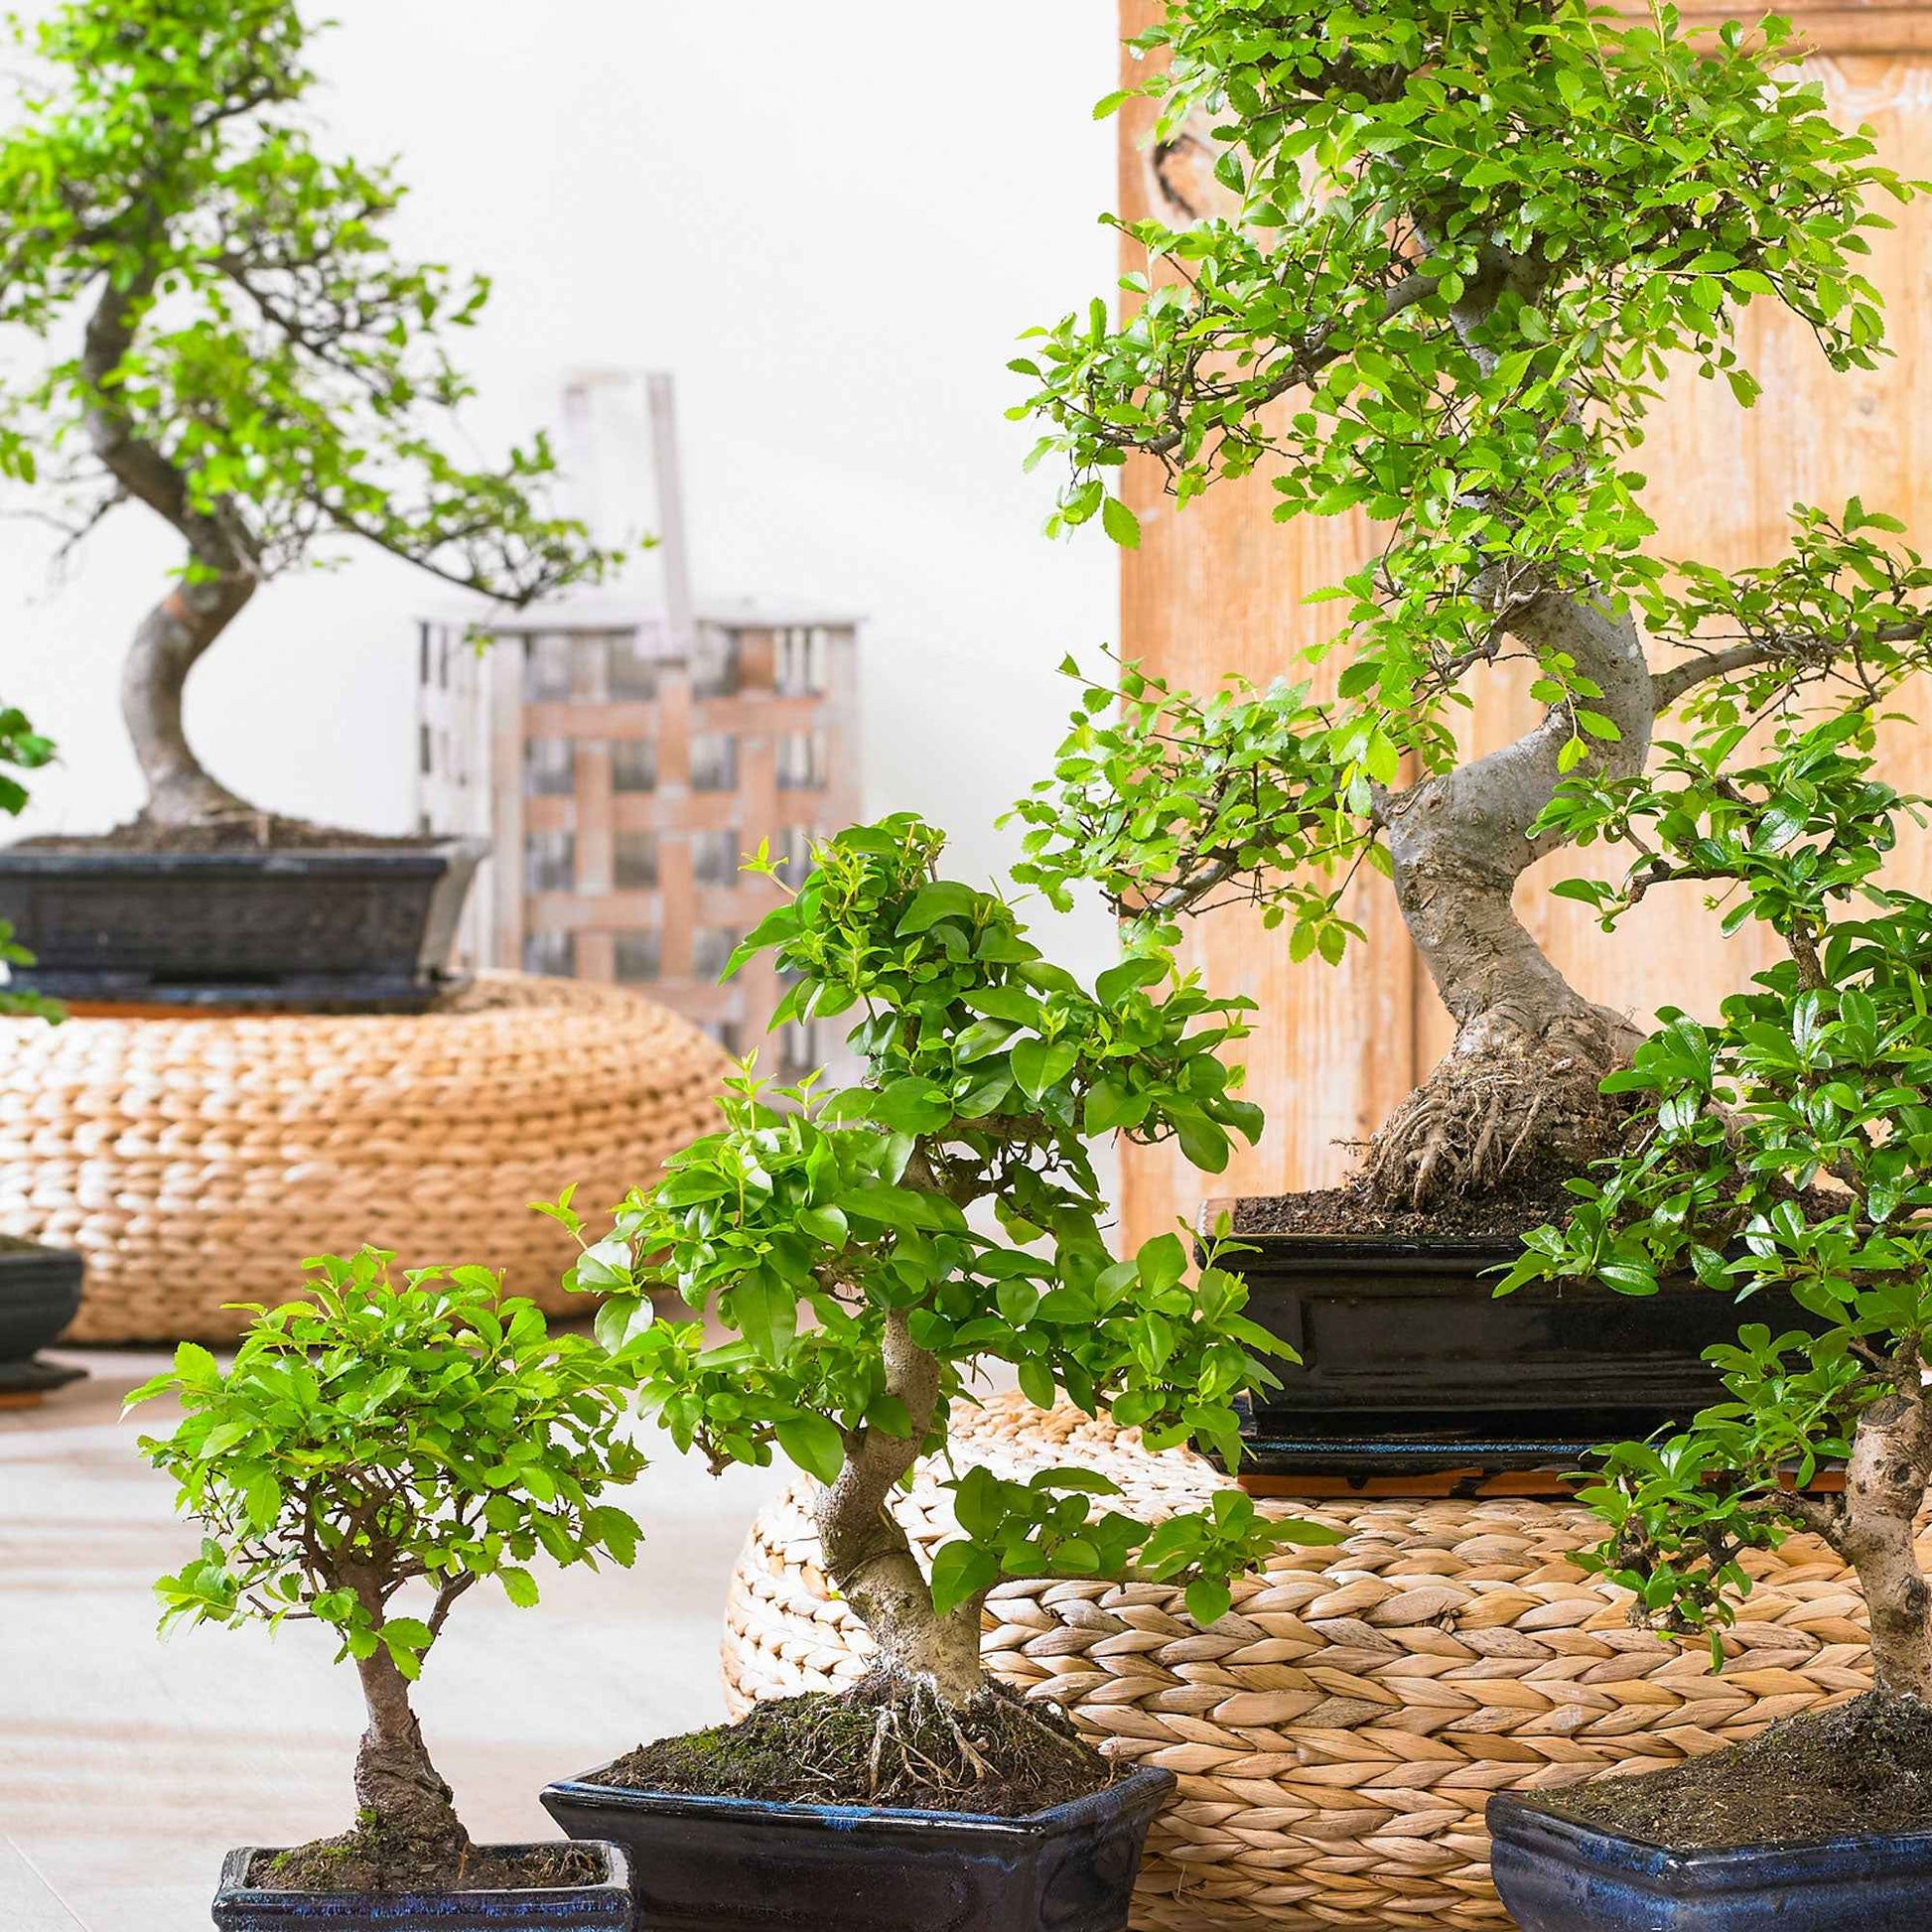 For Oklahoma grower, creating bonsai trees no small task